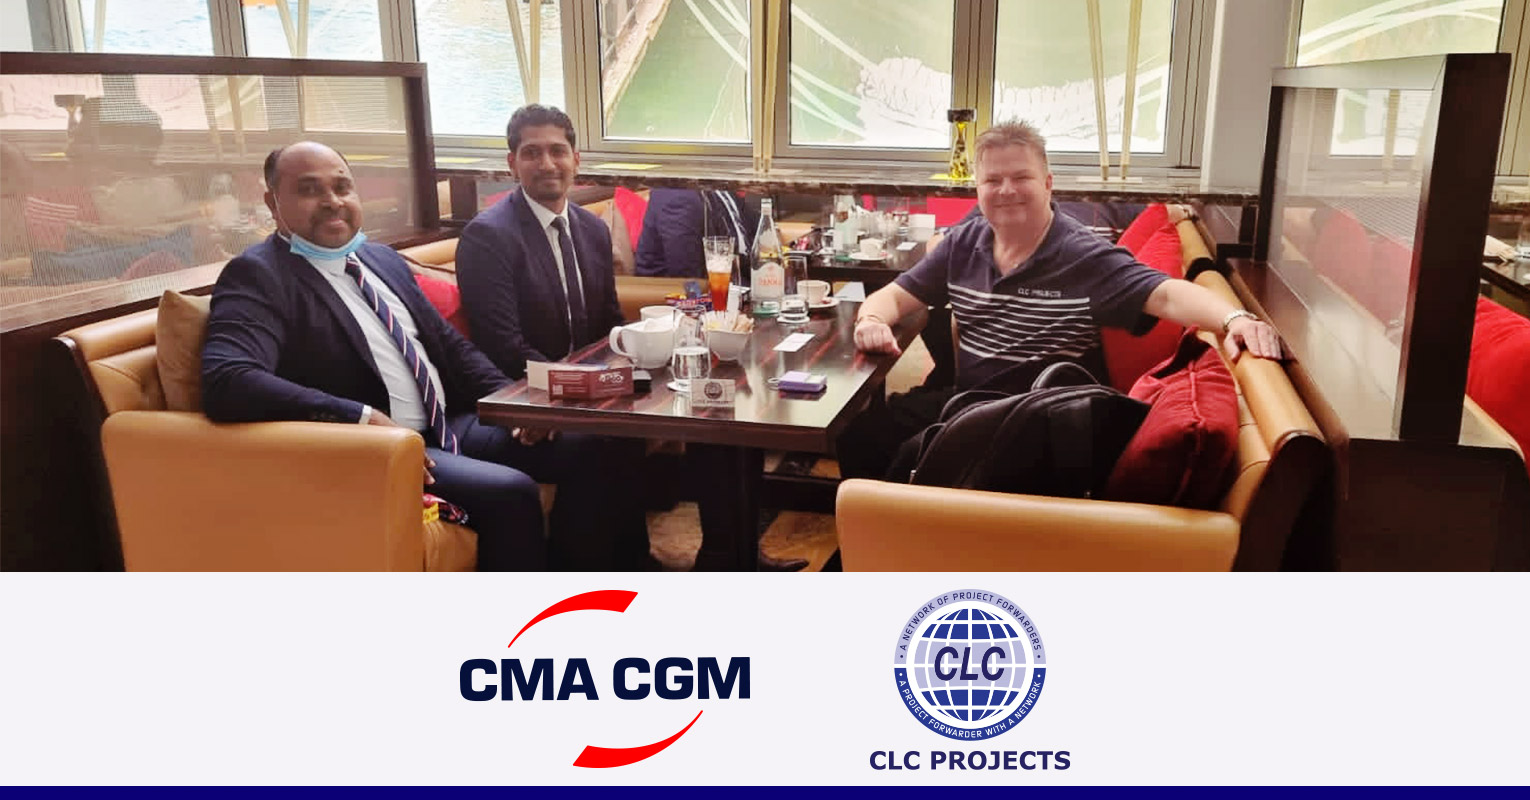 CLC Projects Chairman met with Jacob George and P.M. Razi of CMA CGM in Doha, Qatar